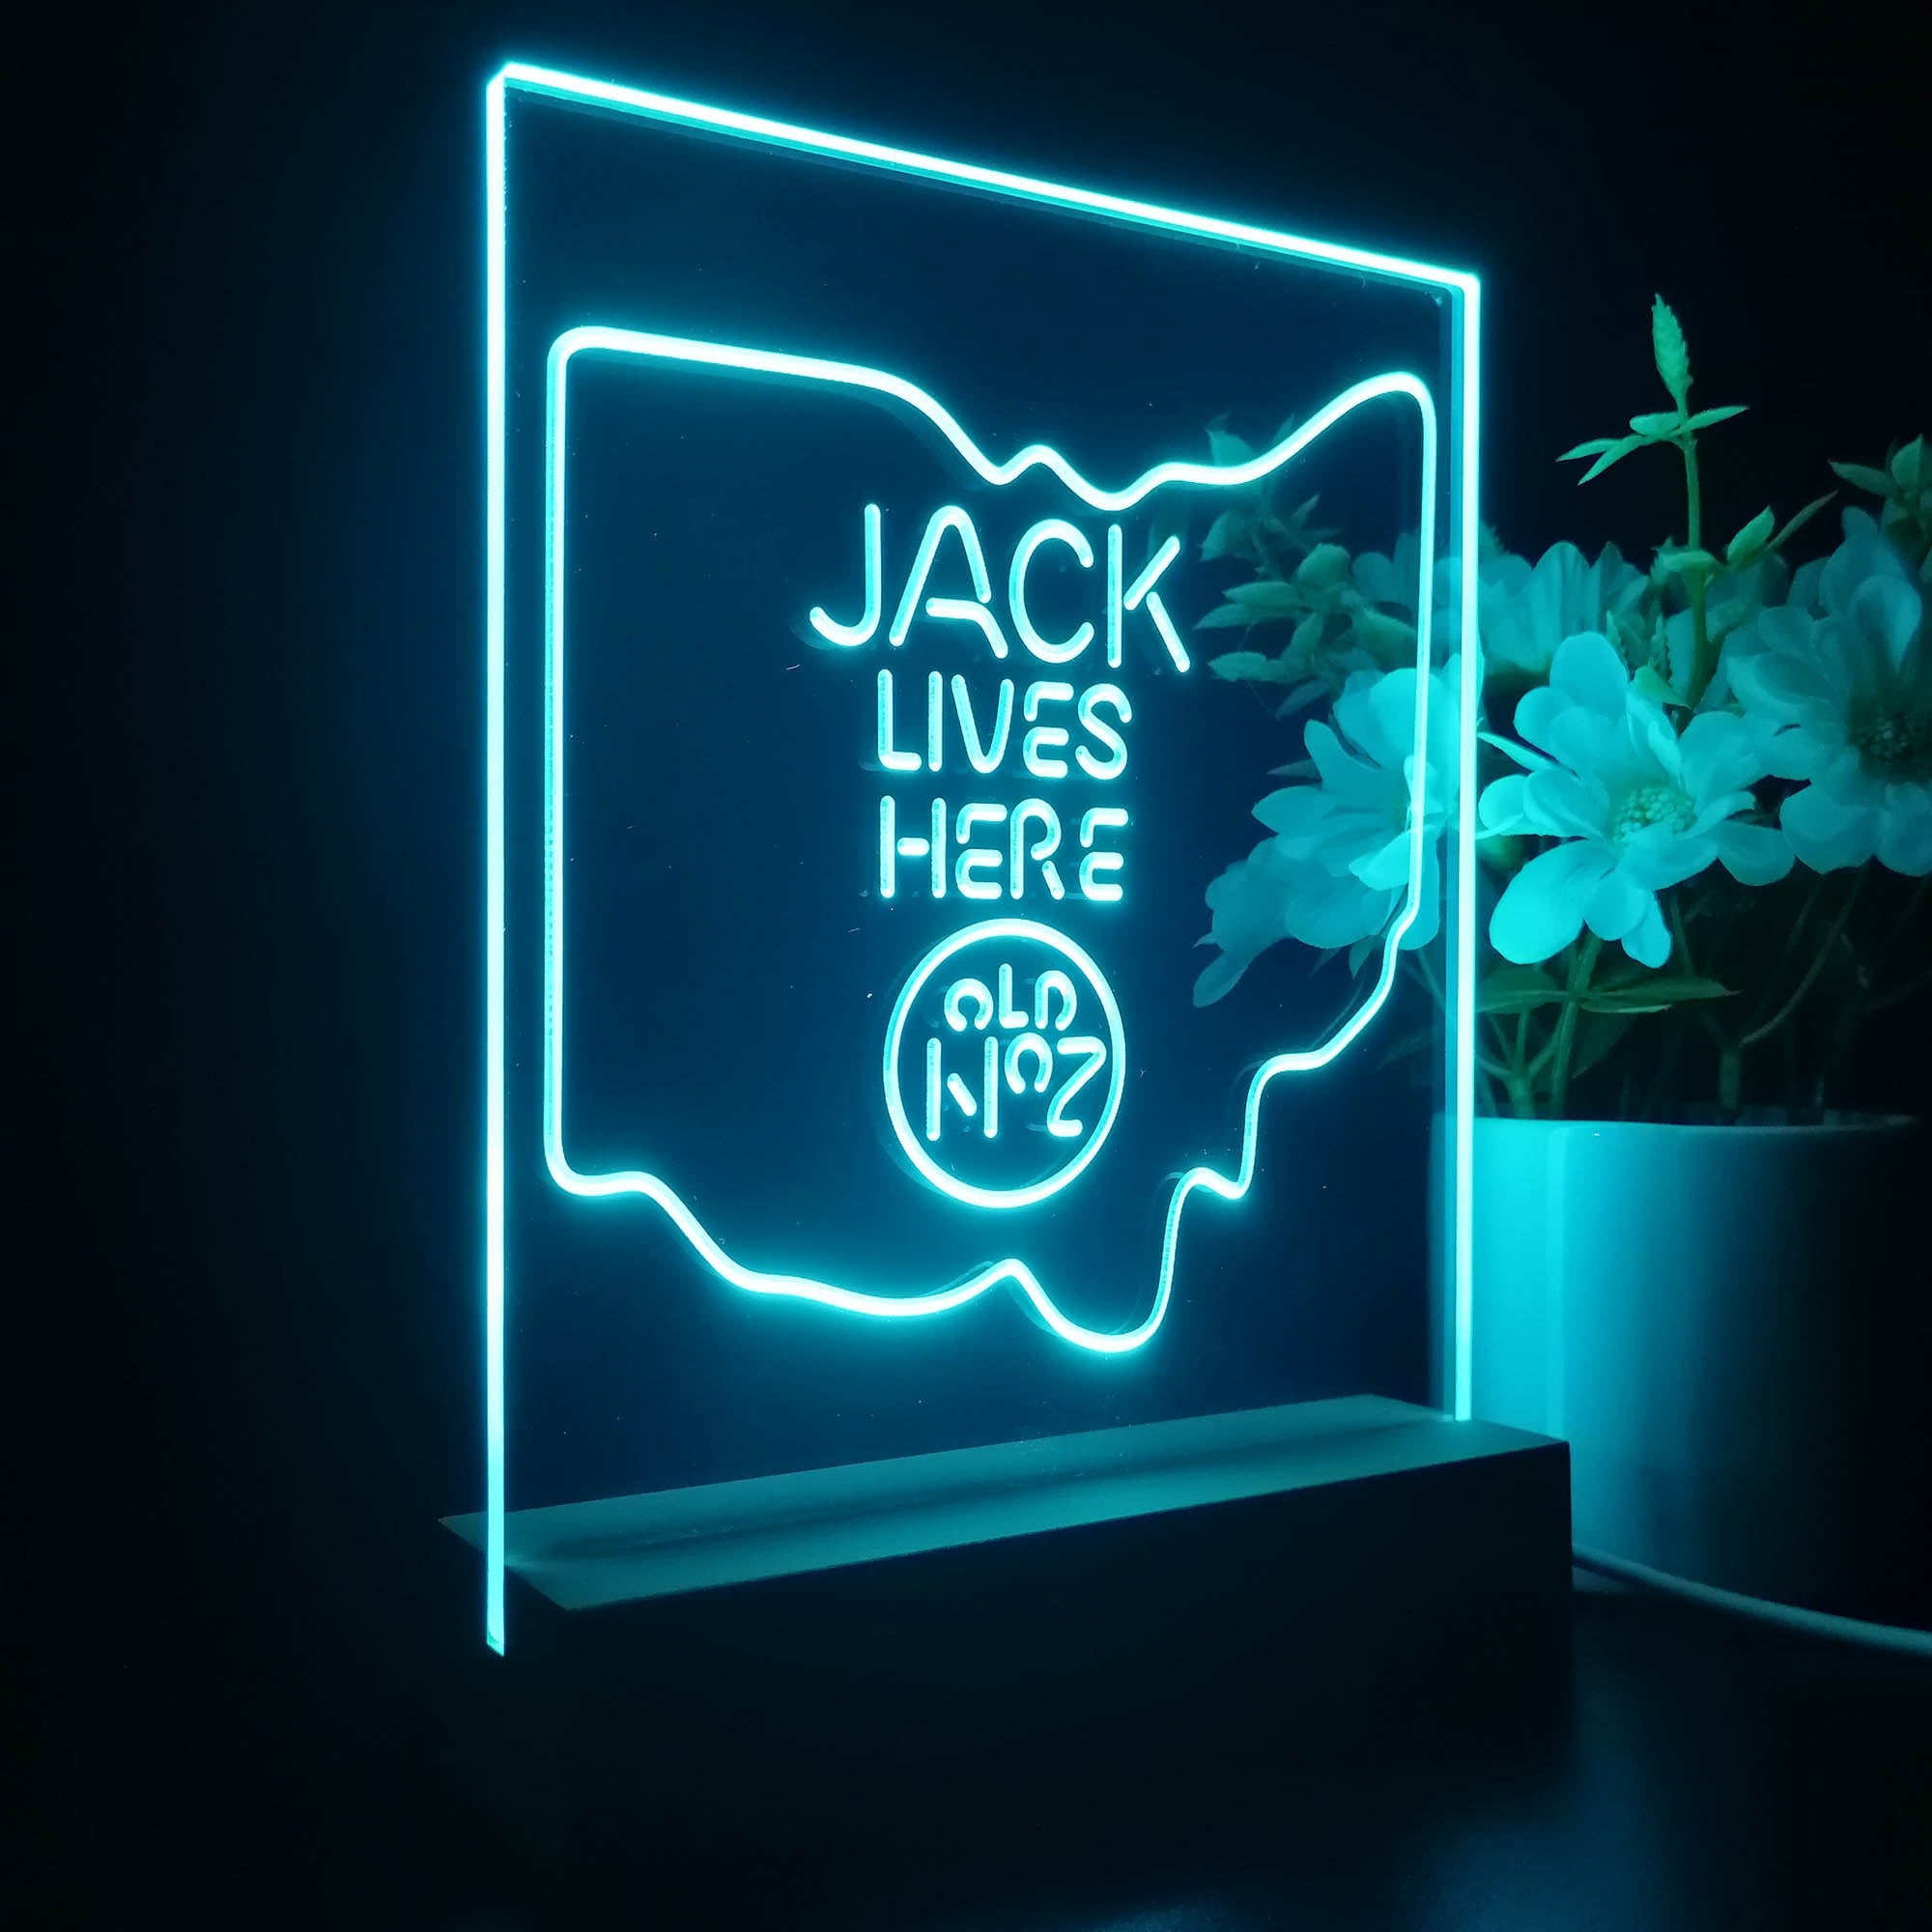 Ohio Jack Lives Here 3D Illusion Night Light Desk Lamp